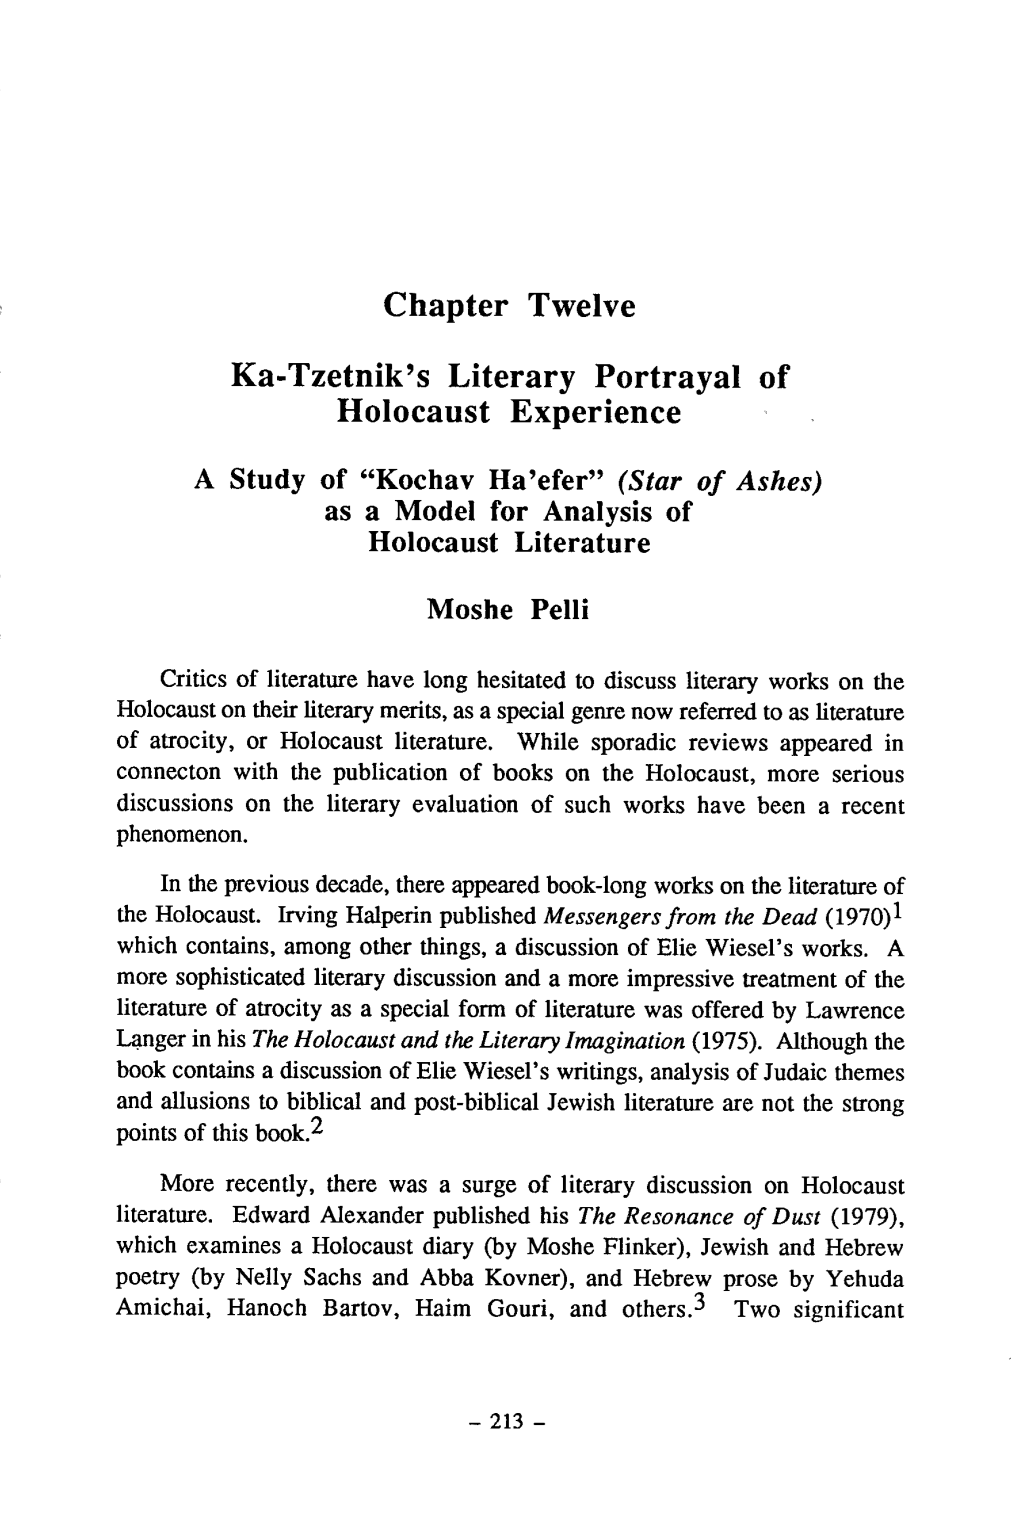 Chapter Twelve Ka-Tzetnik's Literary Portrayal of Holocaust Experience